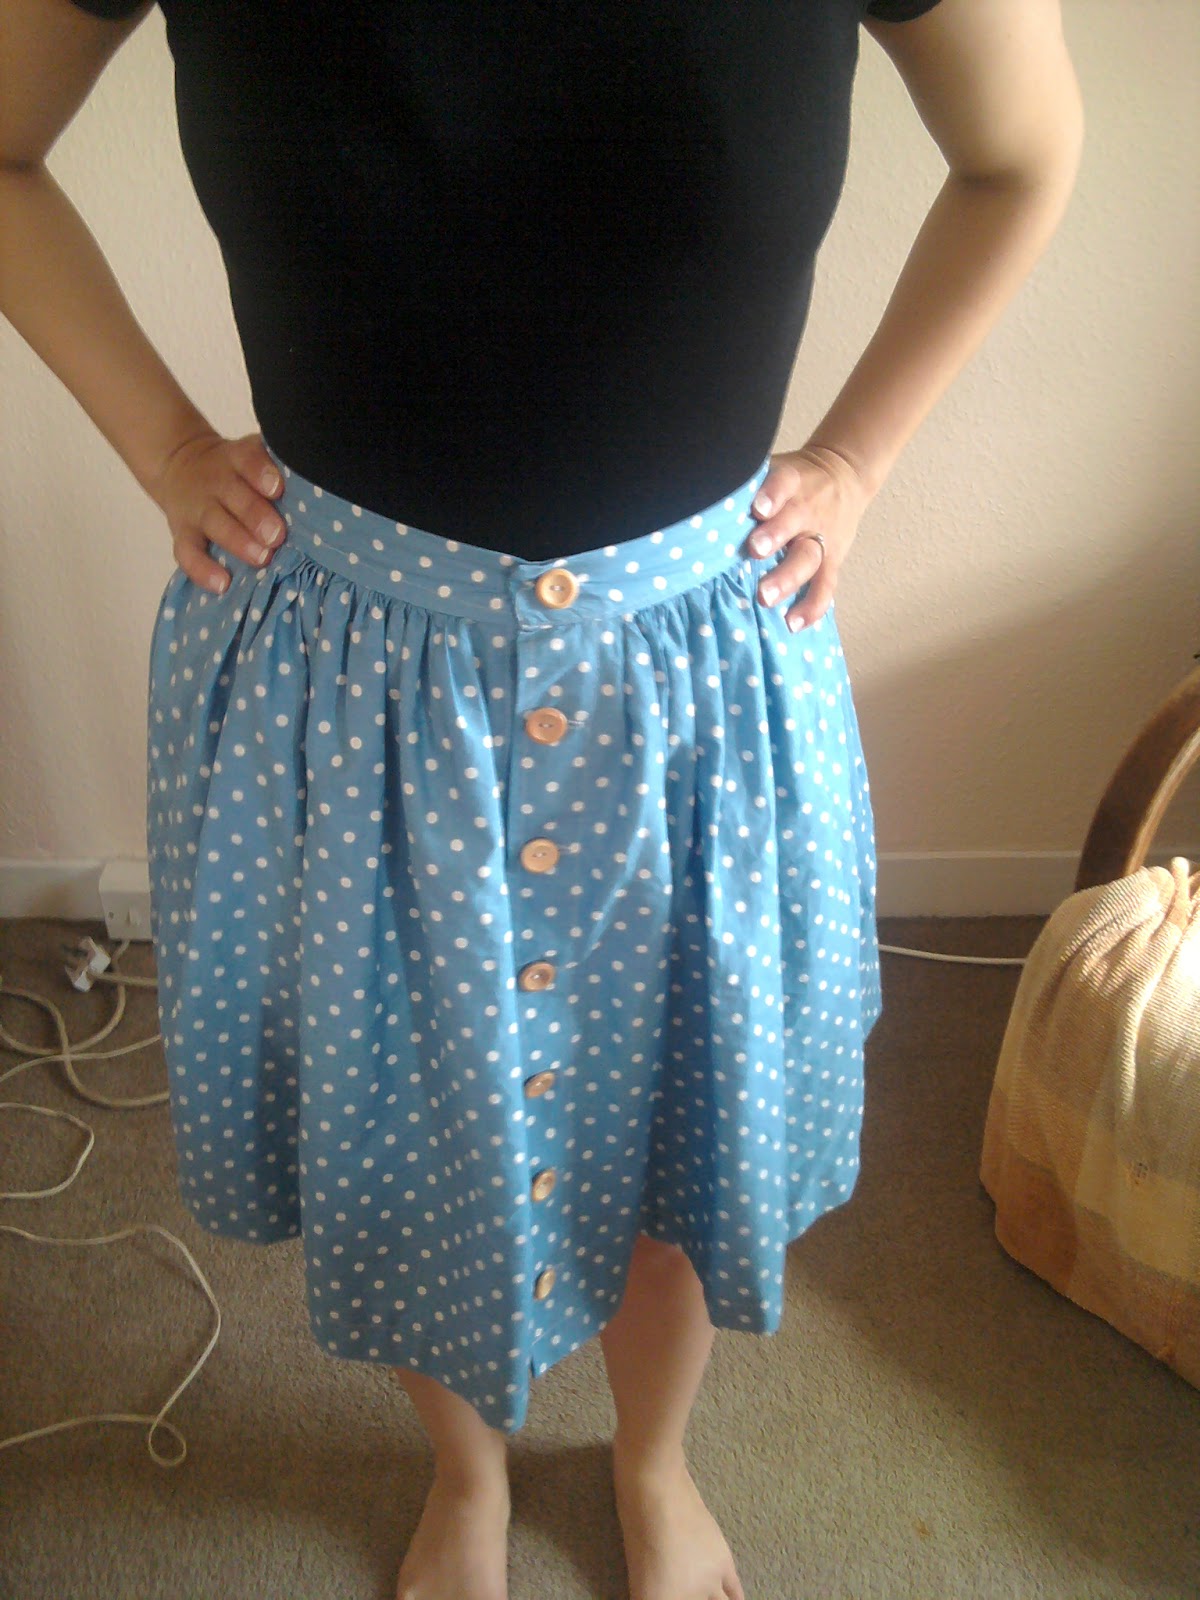 Sarah-Lou: My Polka Dot Picnic Blanket Skirt